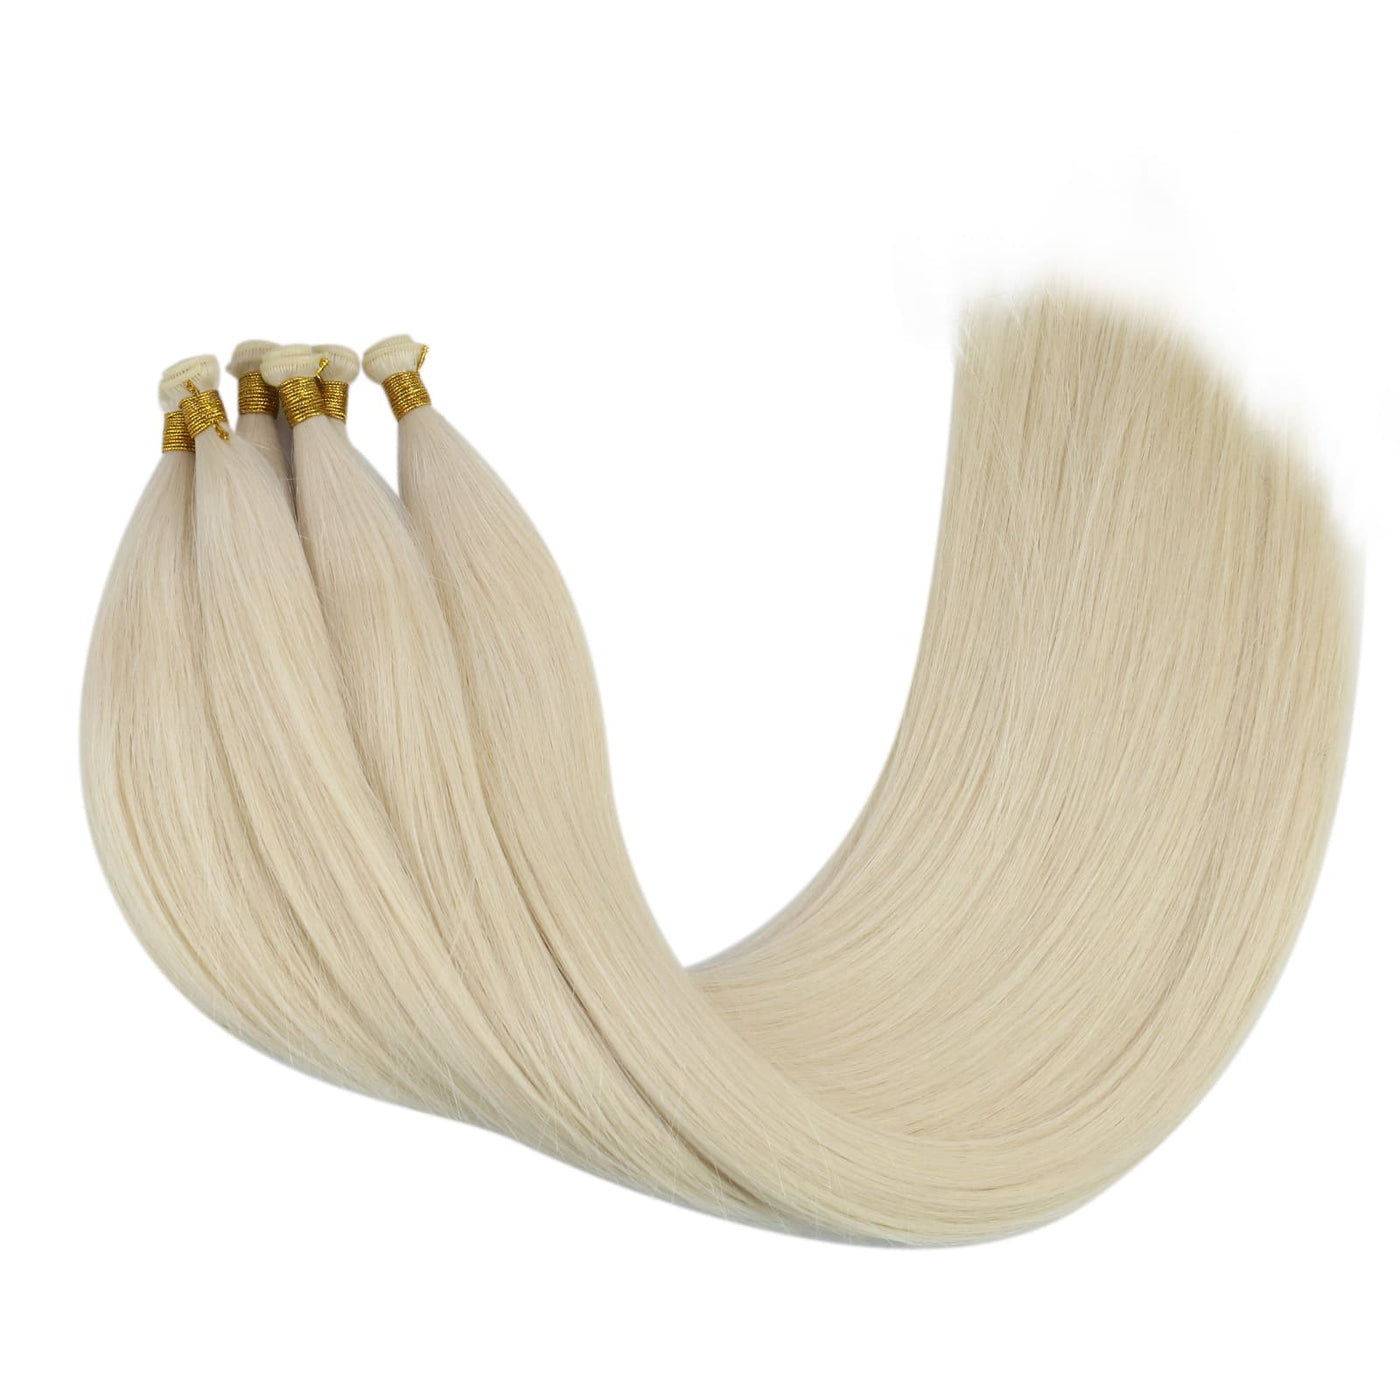 [virgin+]Human Hair Natural Genius Weft Extensions Weave Bundles Straight Whitest Blonde #1000